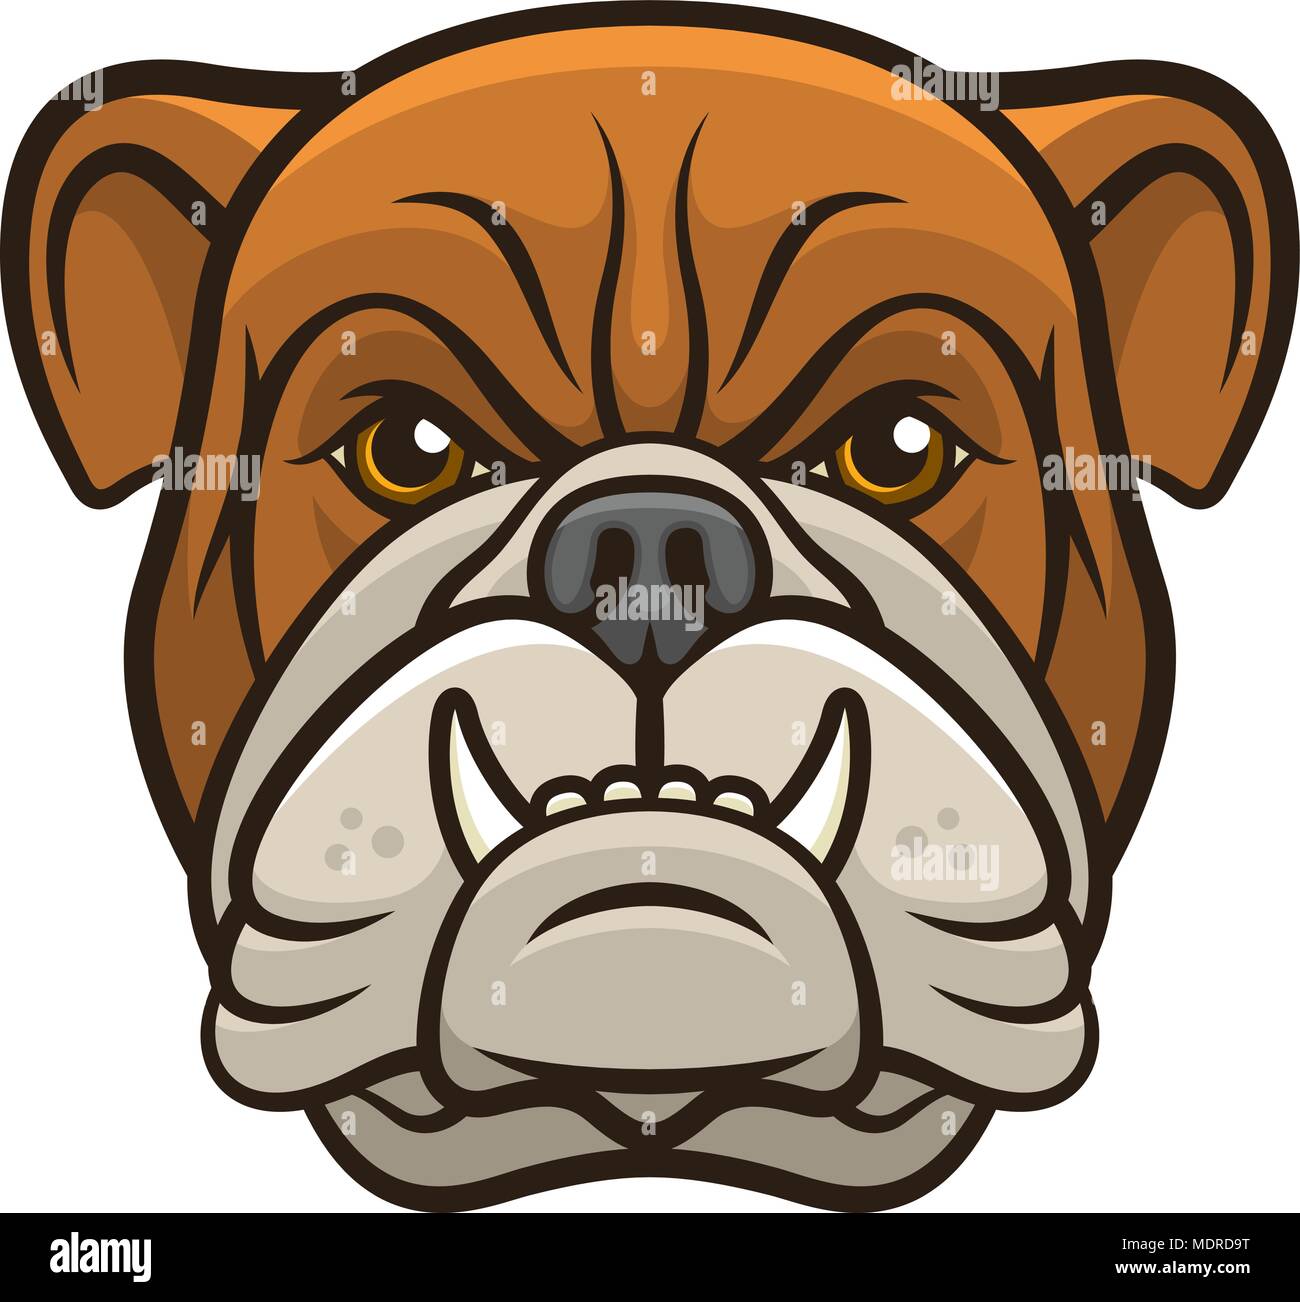 Cool Bulldog Head with American Flag Dog Vector Clipart Illustration Cartoon USA Flag US Dogs Digital File Download Artwork